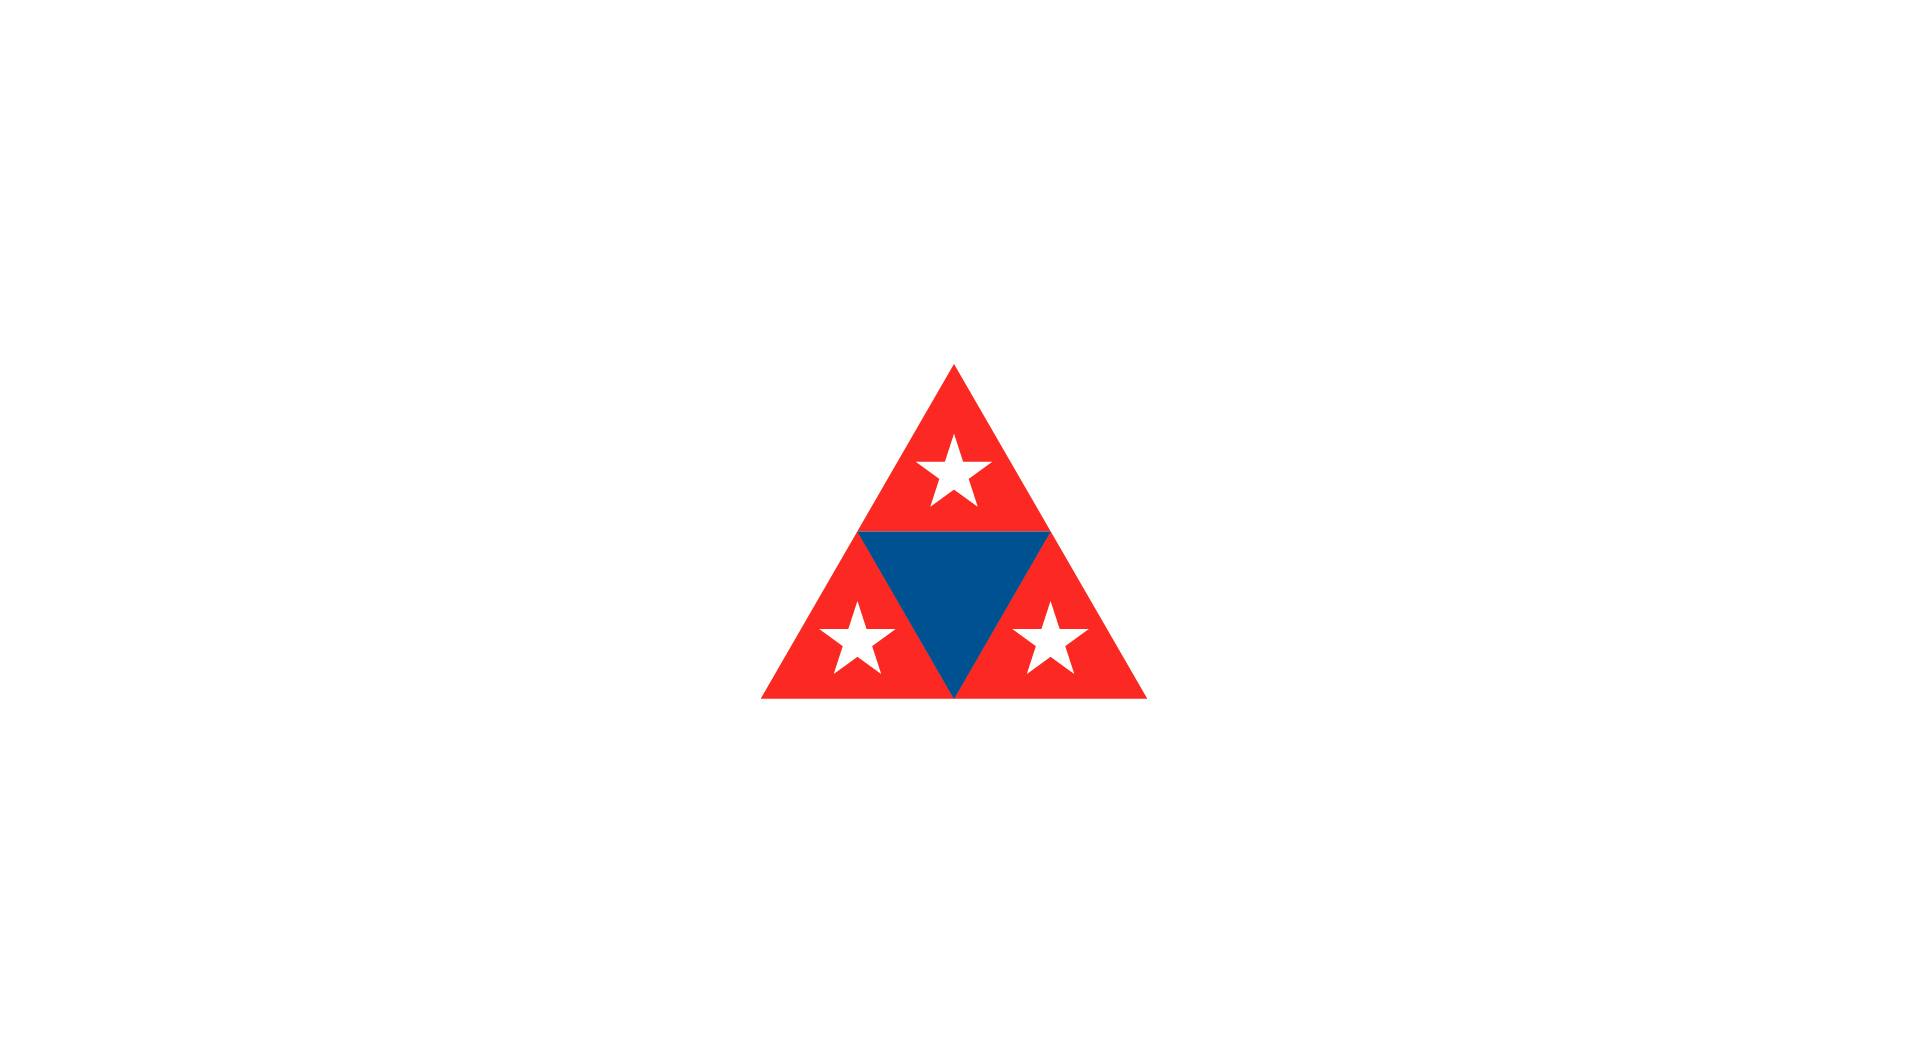 archbold logo symbol abs